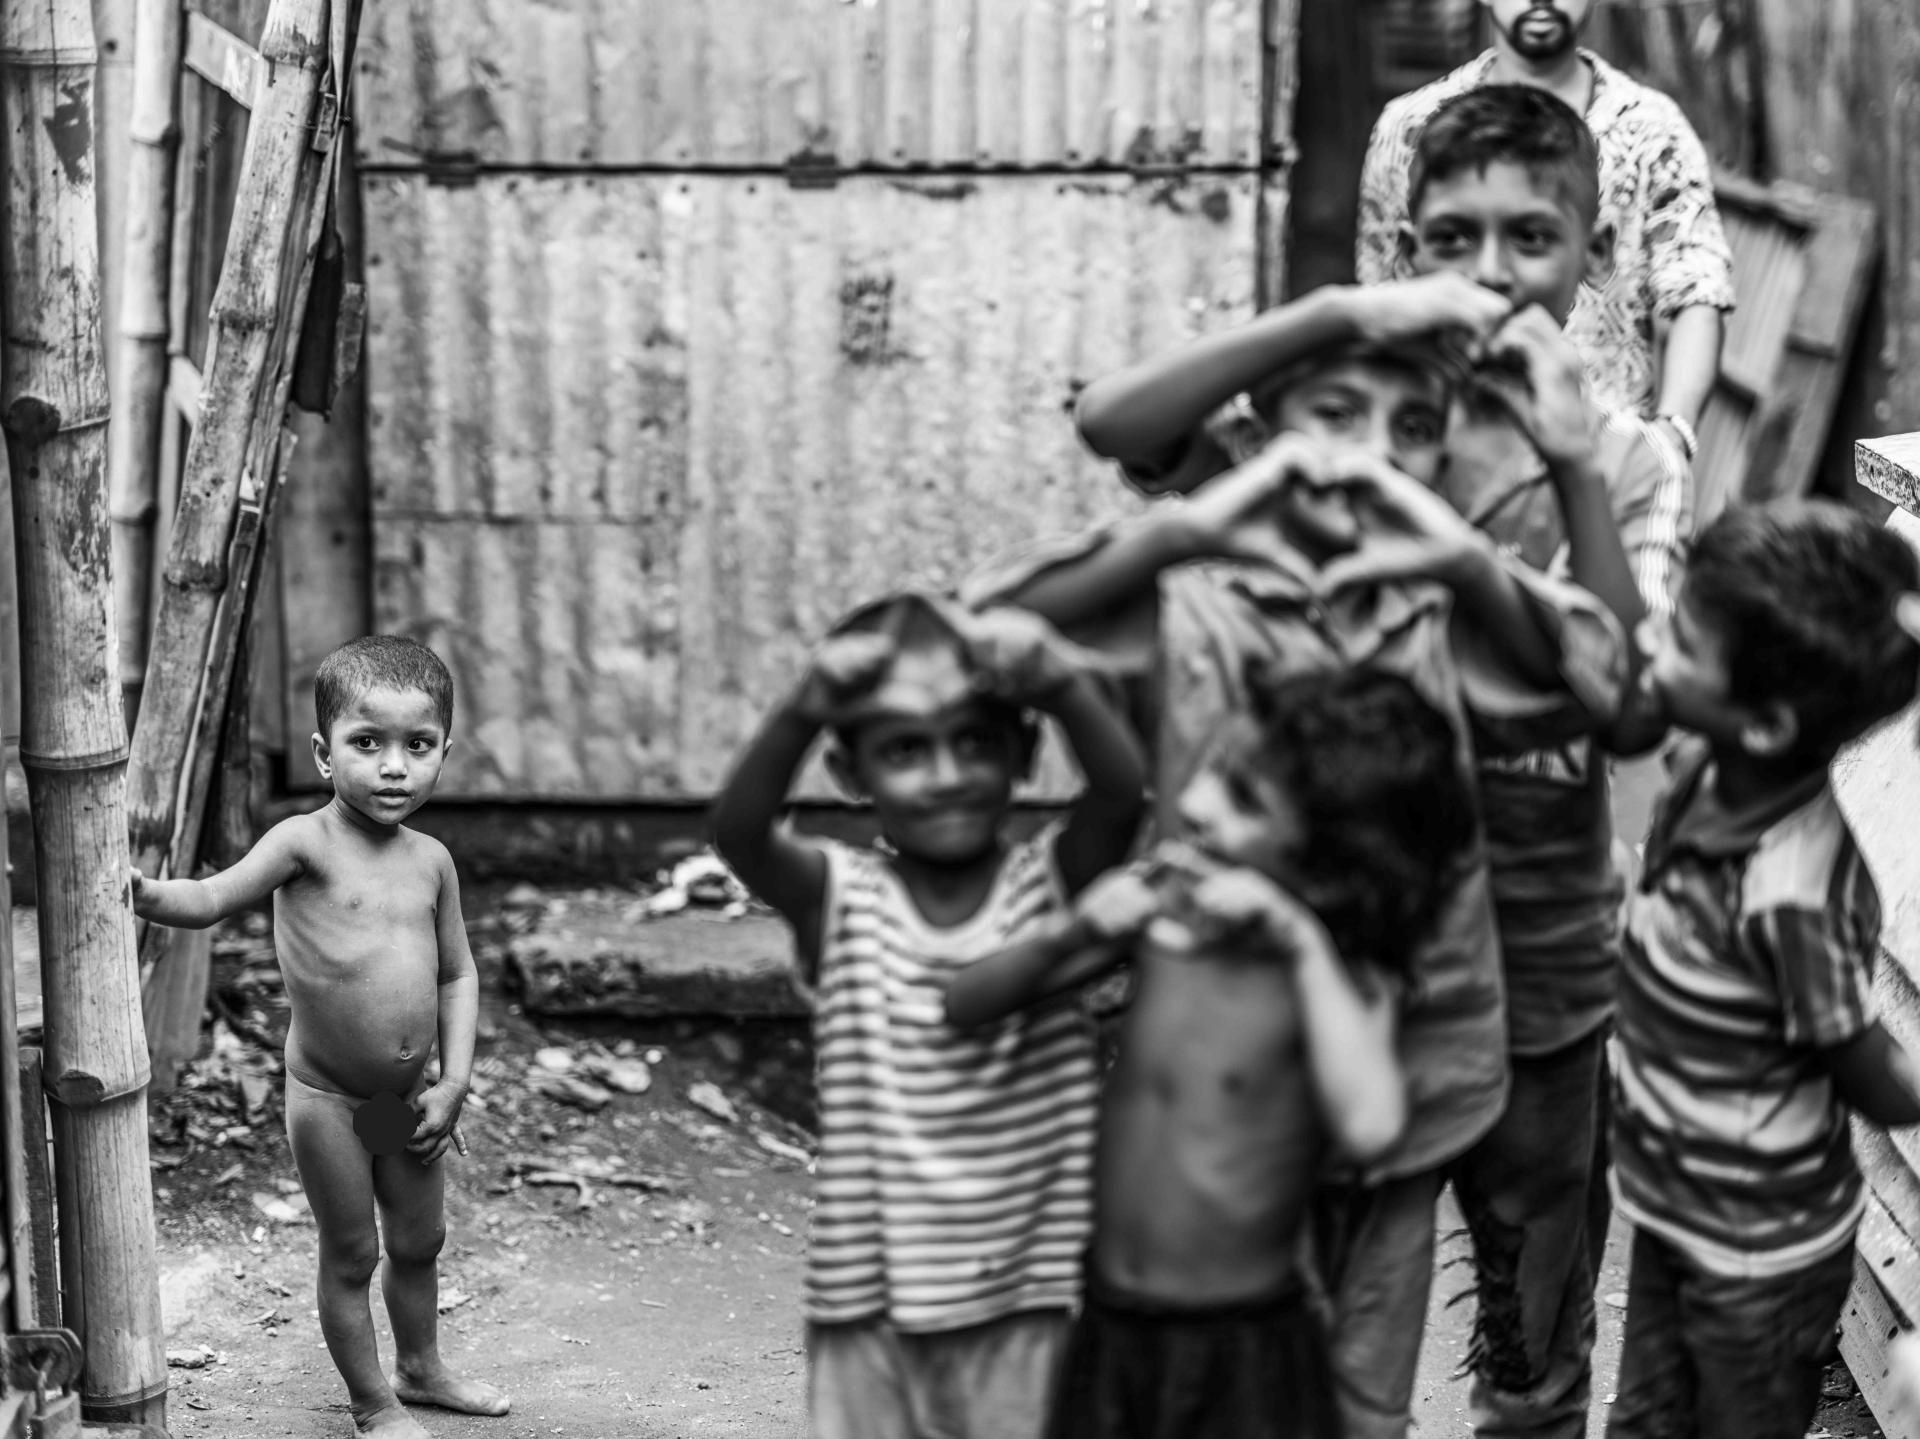 European Photography Awards Winner - Humans of Dhaka